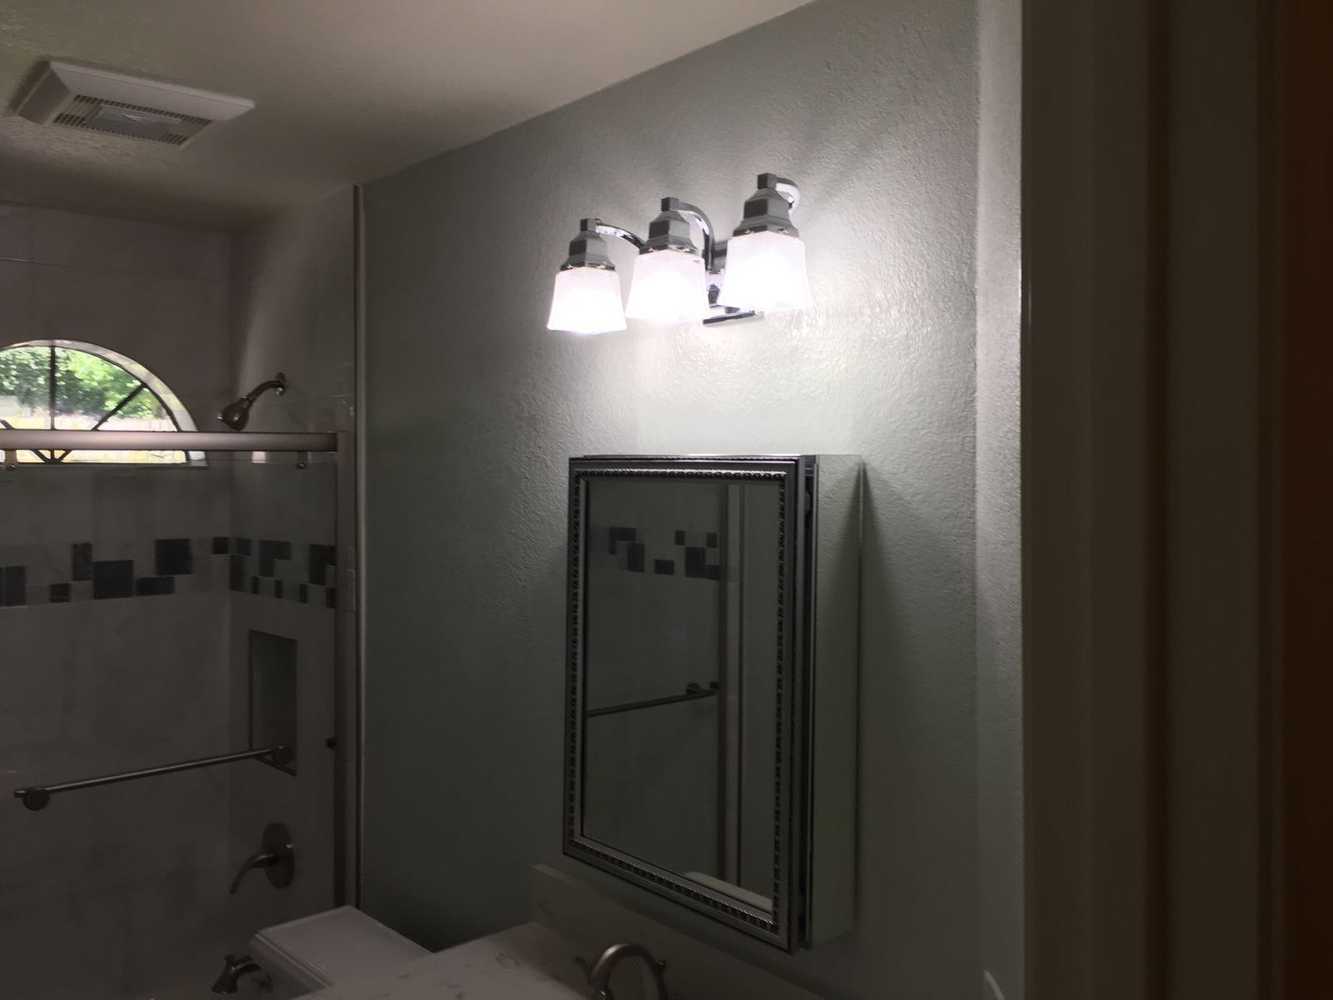 Bathroom Remodel Pictures